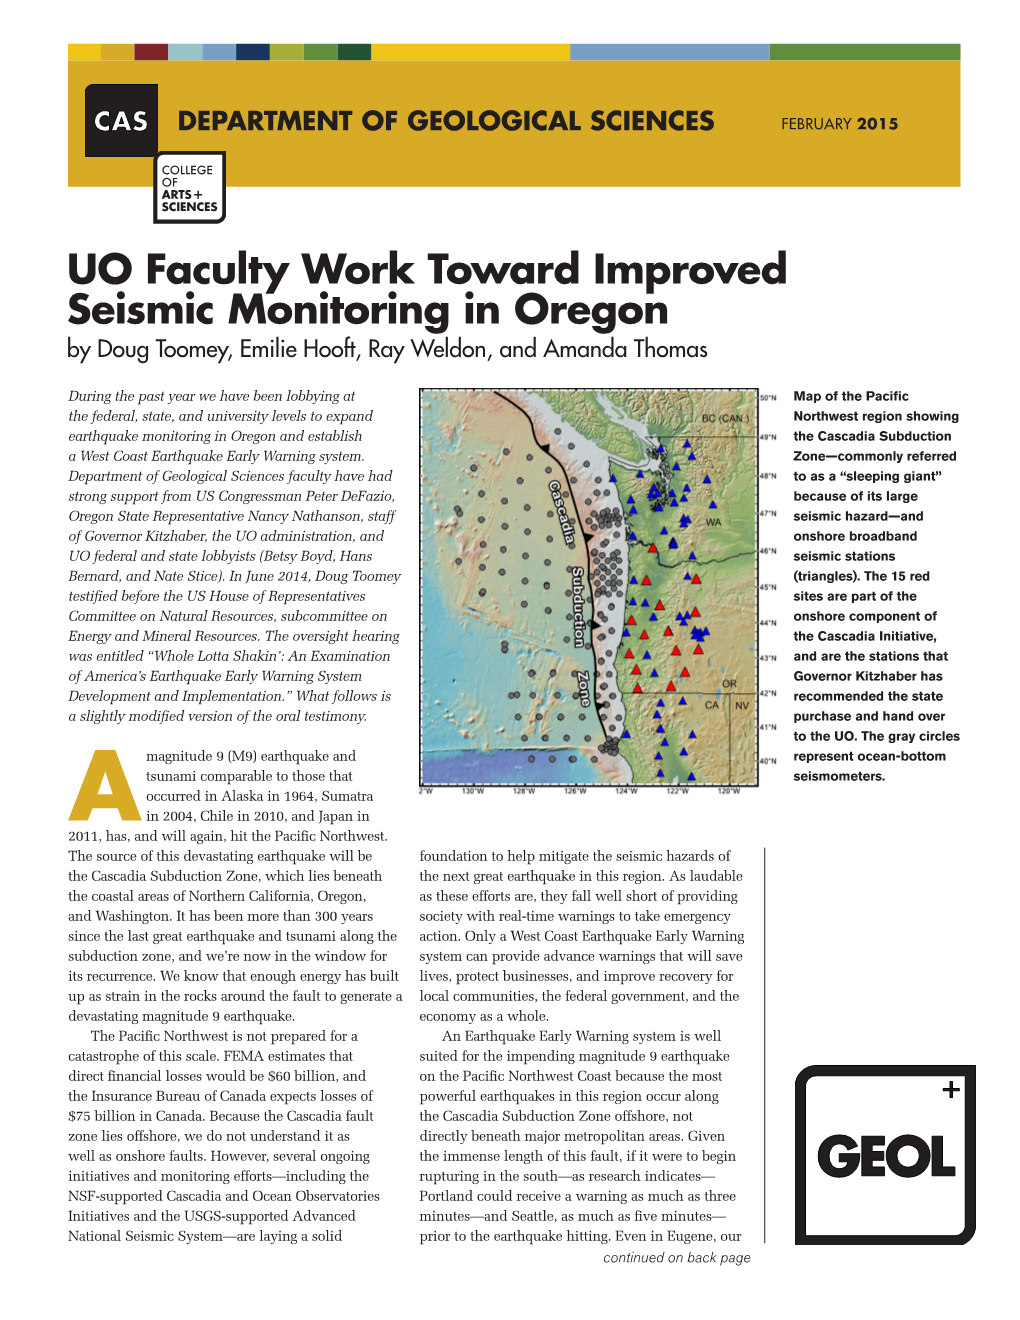 UO Faculty Work Toward Improved Seismic Monitoring in Oregon by Doug Toomey, Emilie Hooft, Ray Weldon, and Amanda Thomas